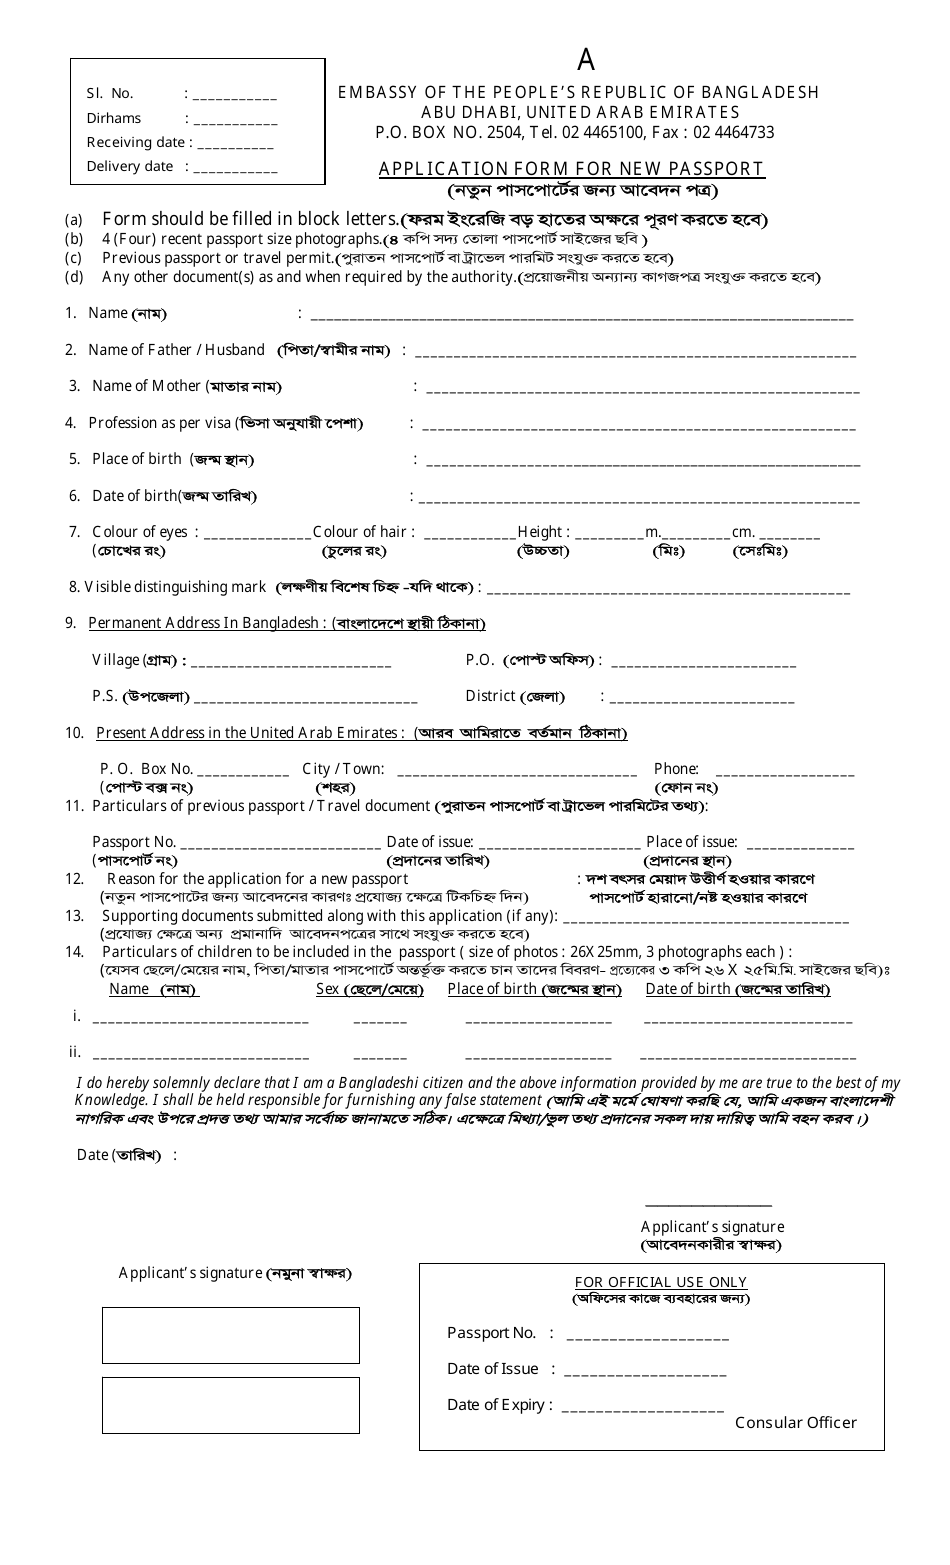 Application Form for New Passport - Bangladesh (English/Arabic), Page 1